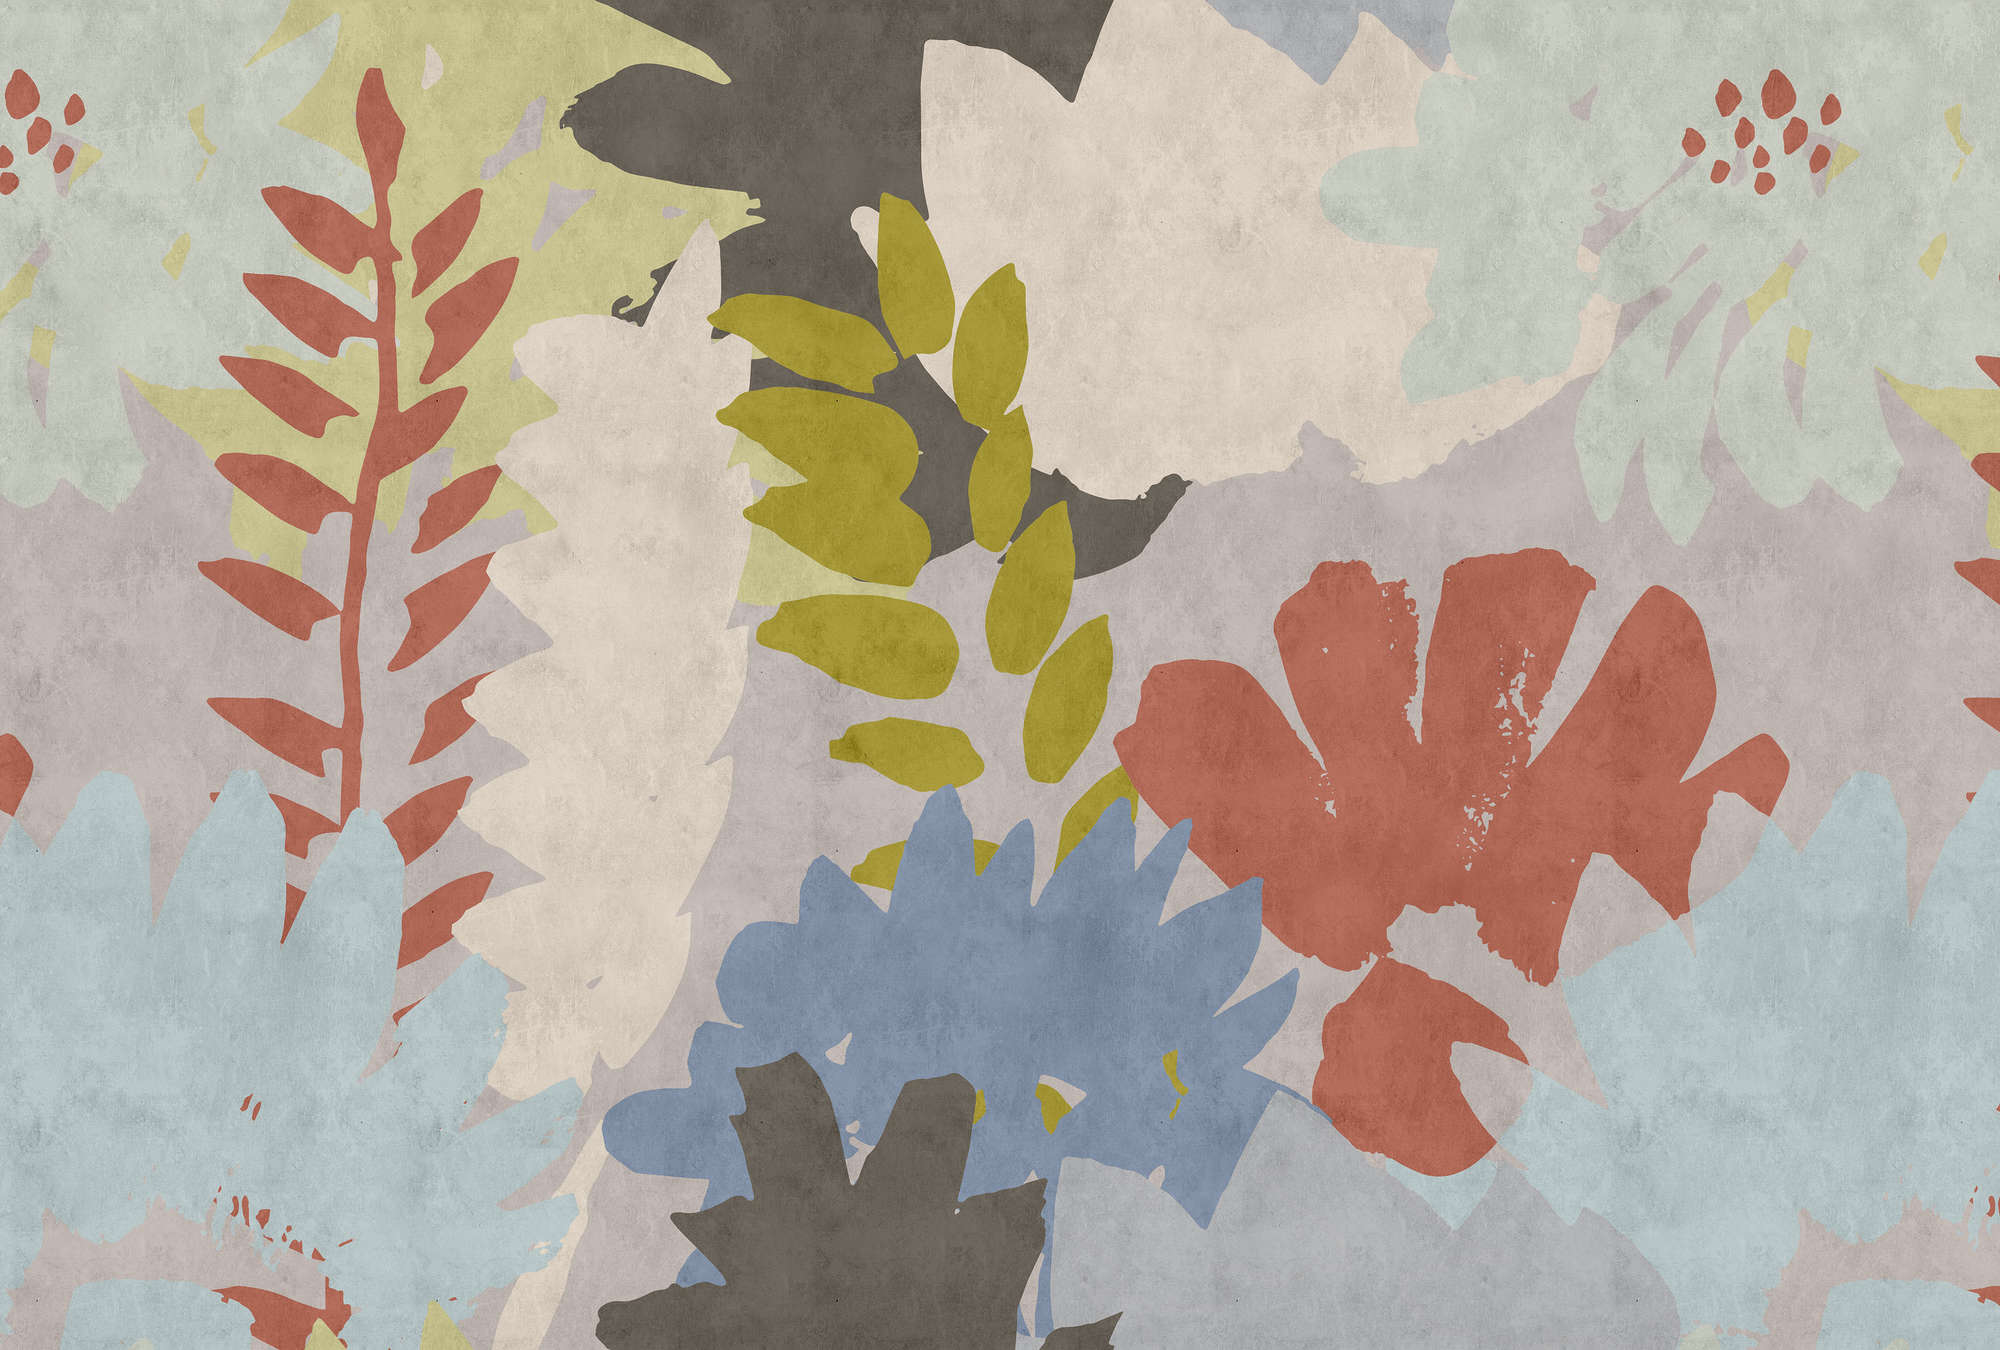             Floral Collage 3 - Abstract behang in vloeipapierstructuur met bladmotief - Blauw, Crème | Parelmoer glad vlies
        